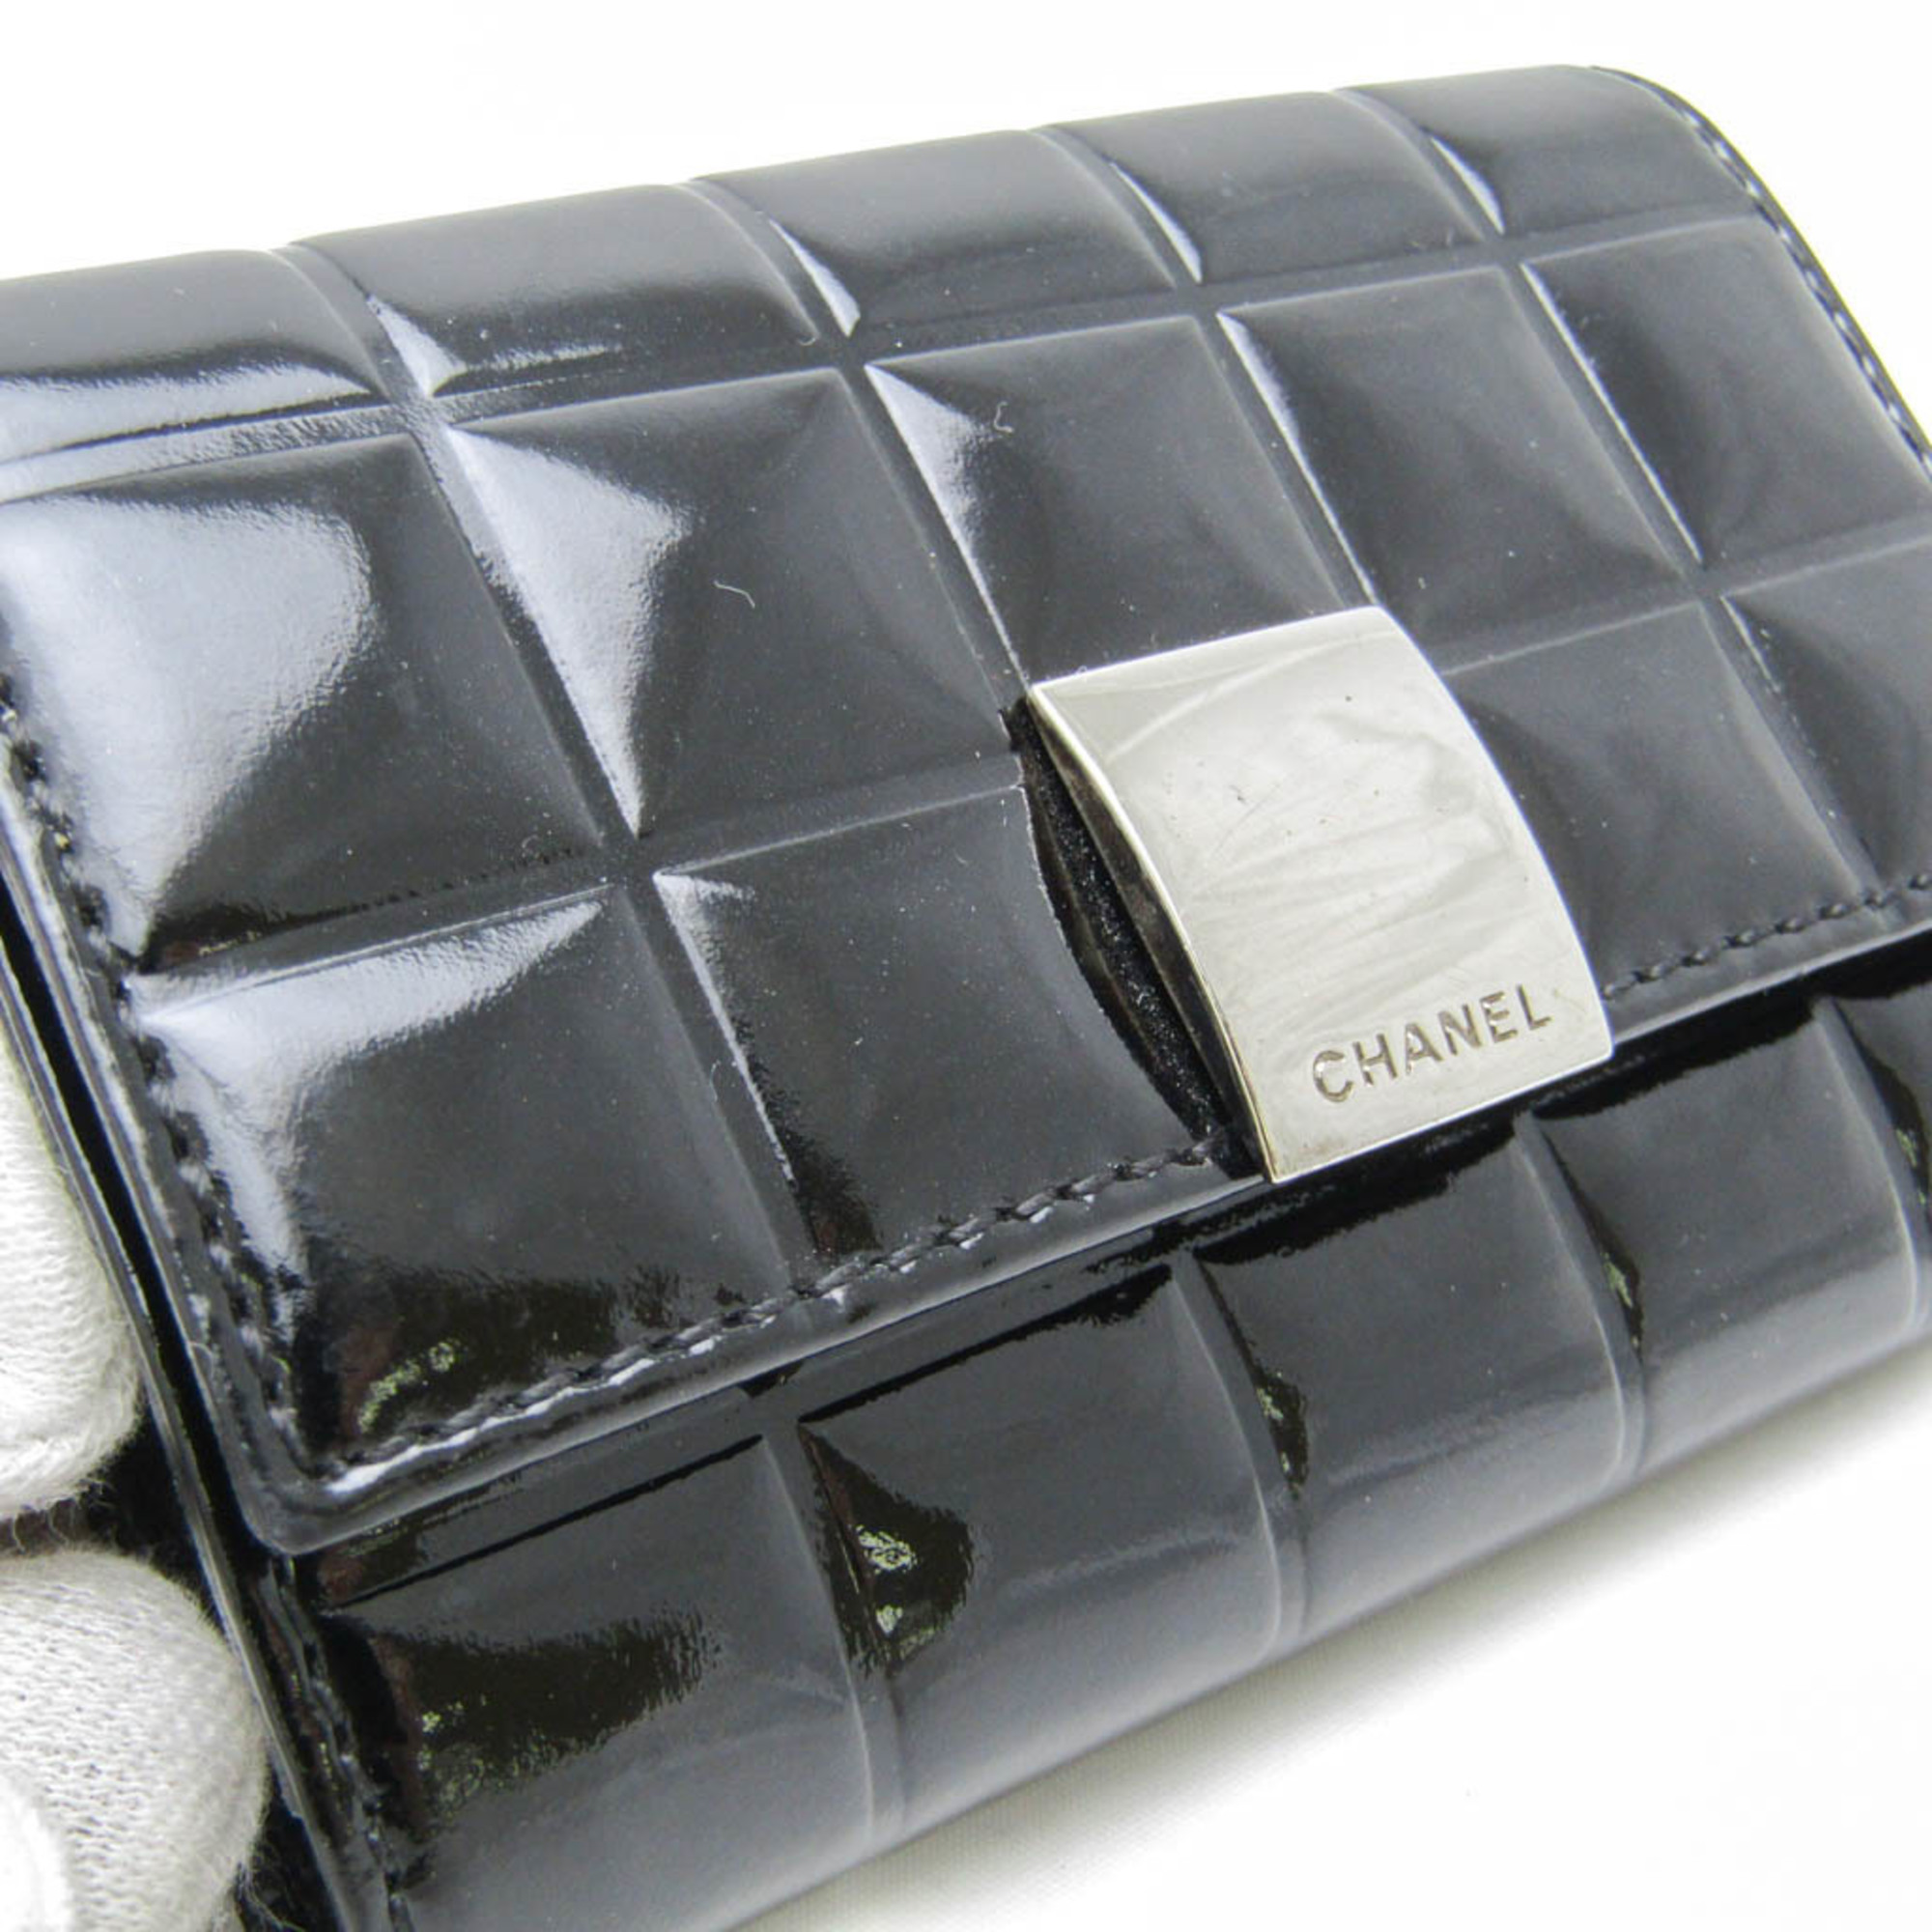 Chanel Chocolate Bar Women's Patent Leather Key Case Black